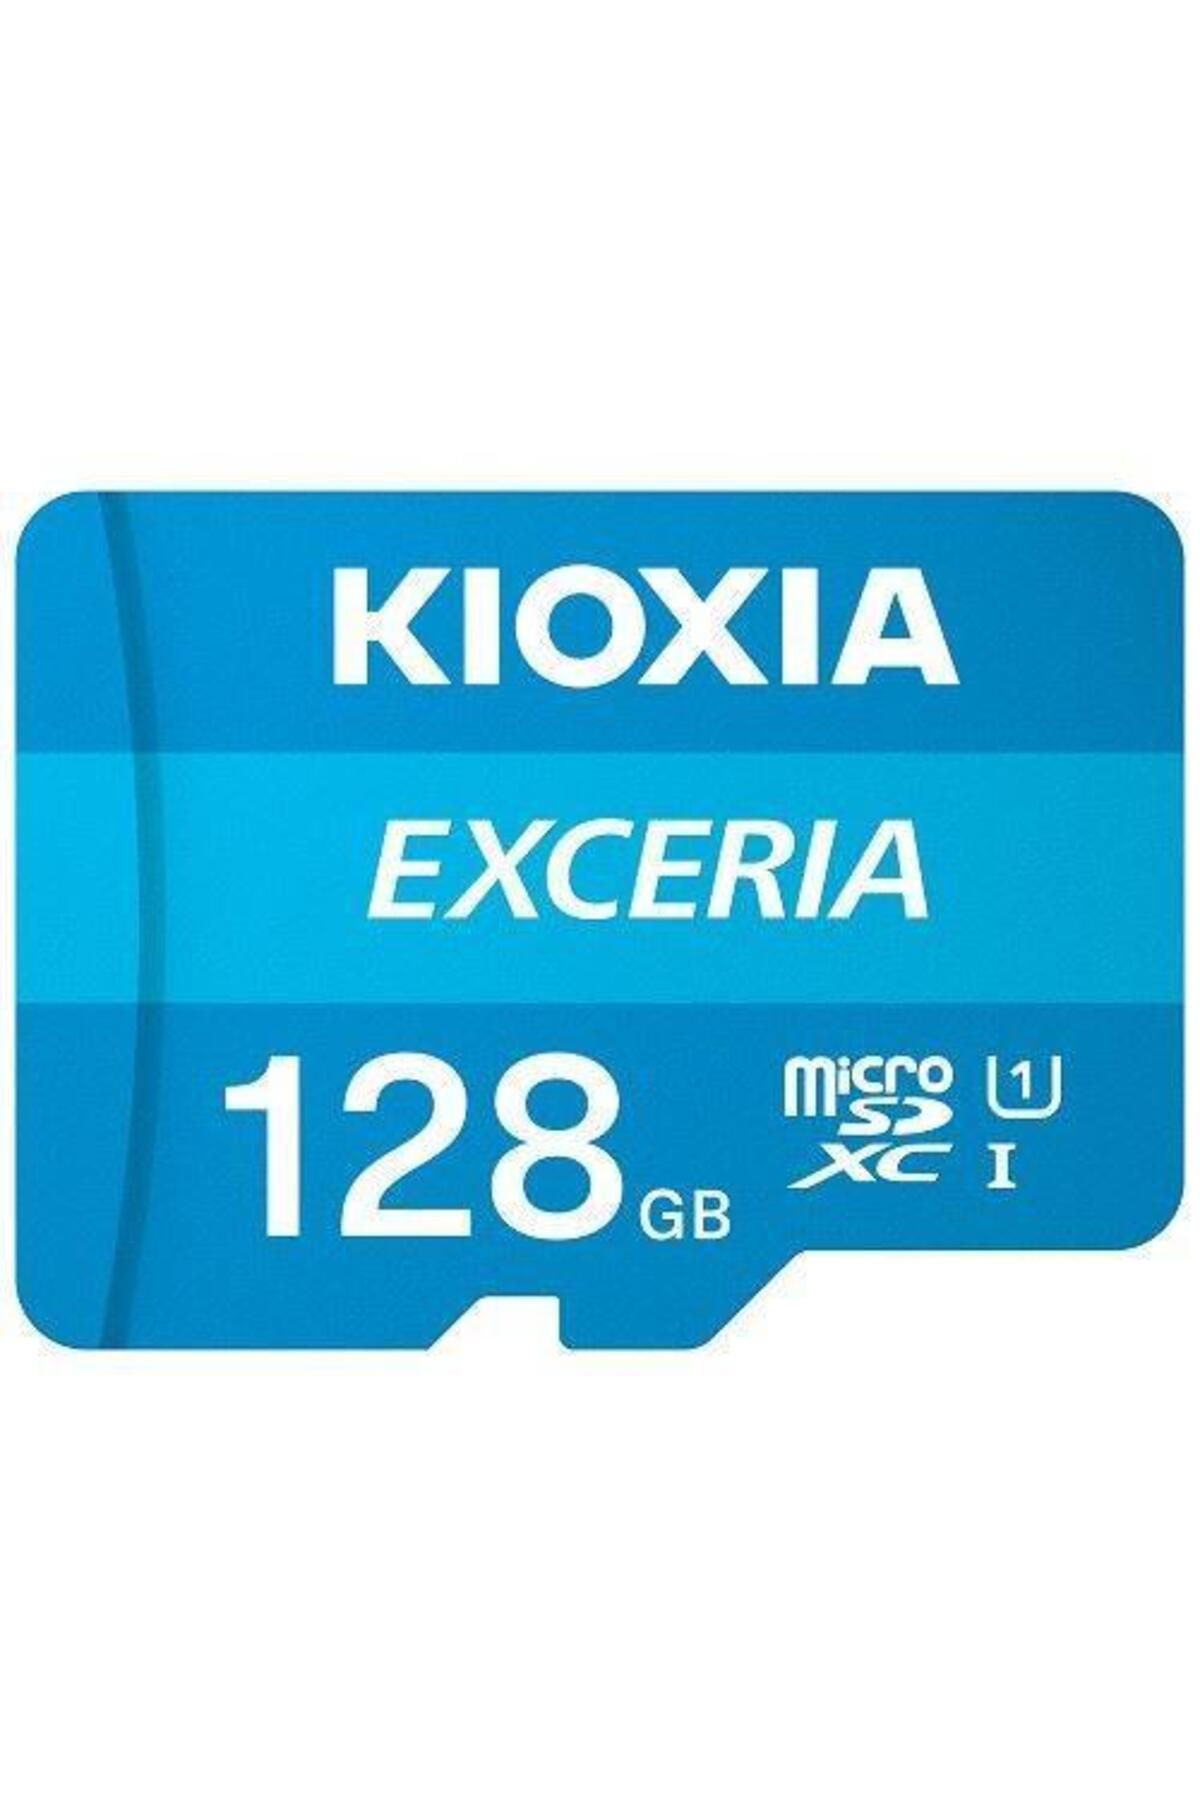 Kioxia Kıoxıa 128gb Excerıa Microsd C10 U1 Uhs1 R100 Hafıza Kartı